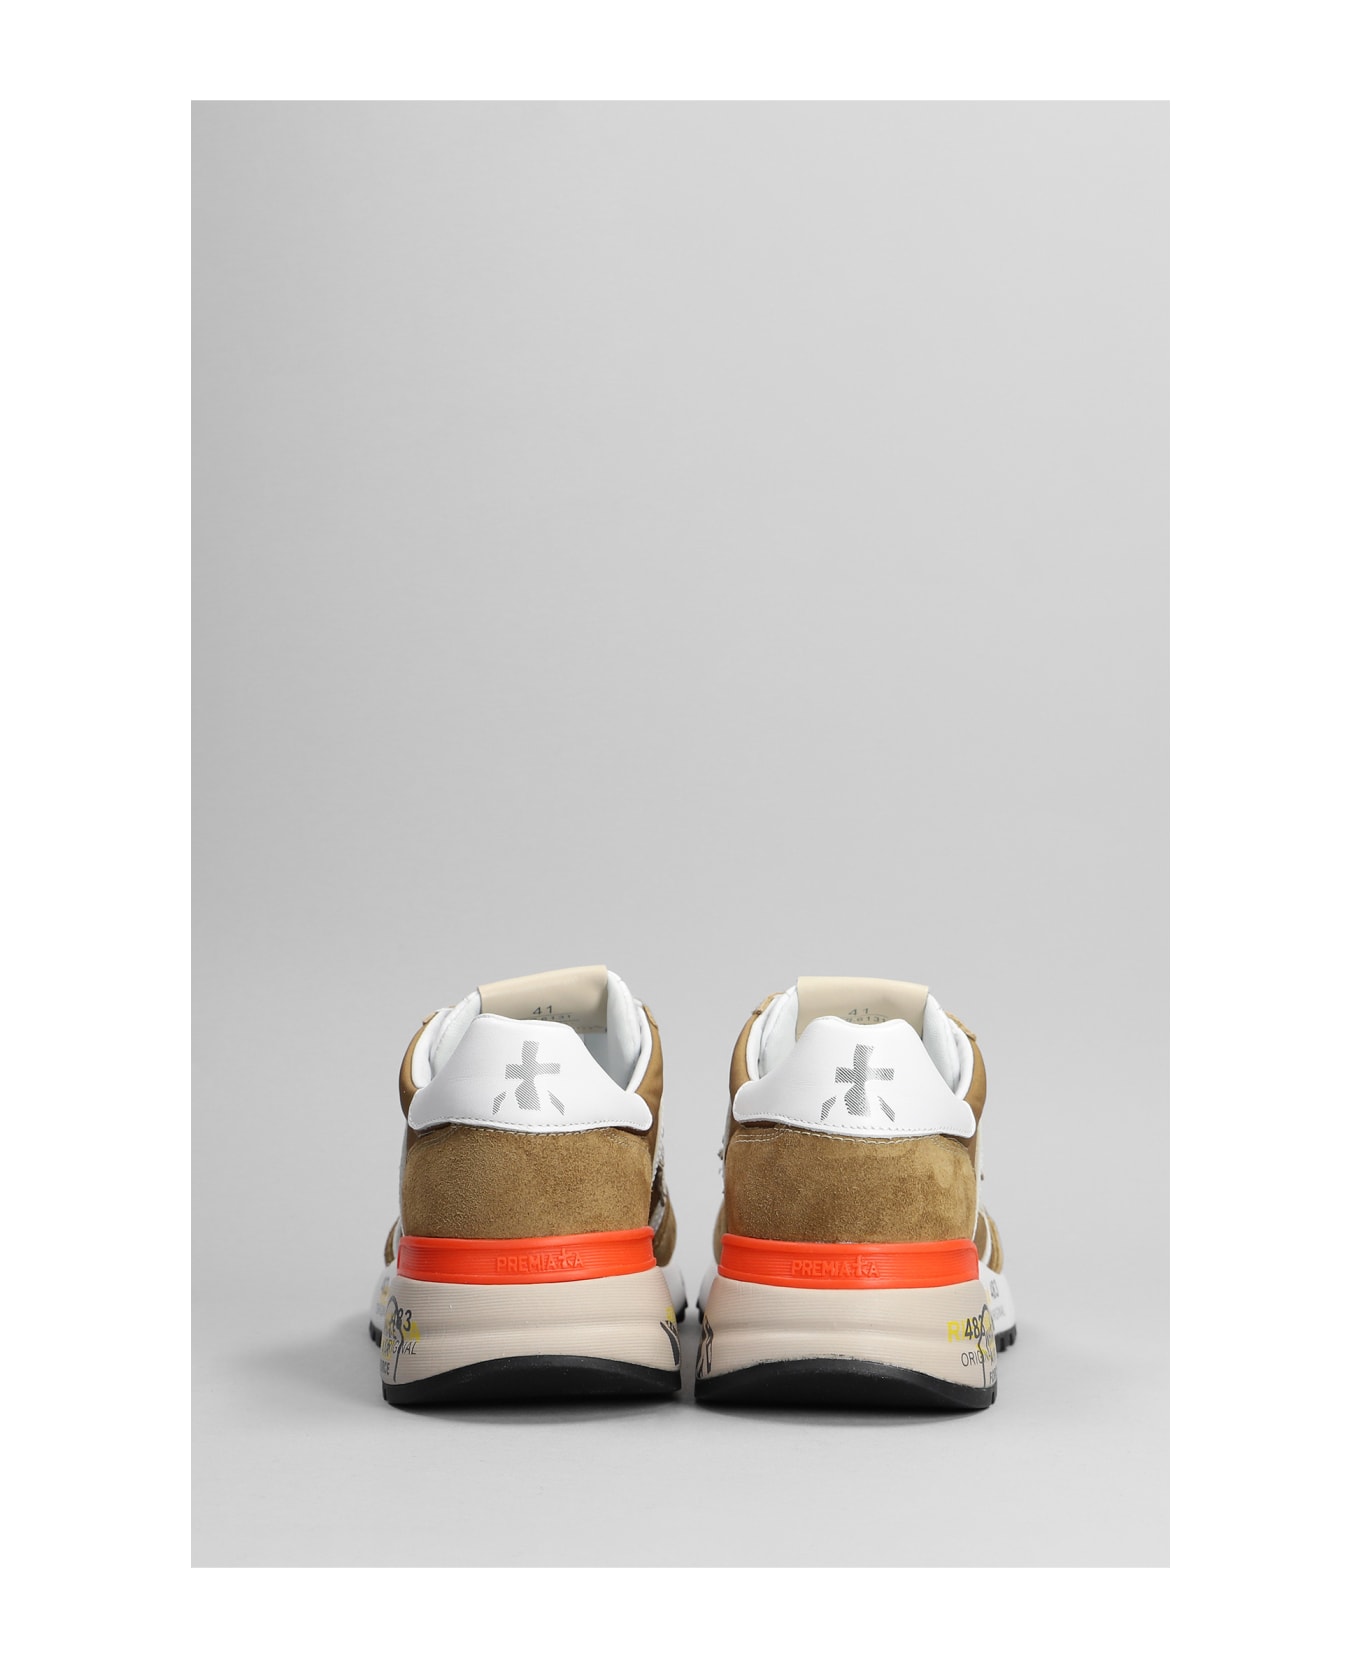 Premiata Lander Sneakers In Brown Suede And Fabric - brown